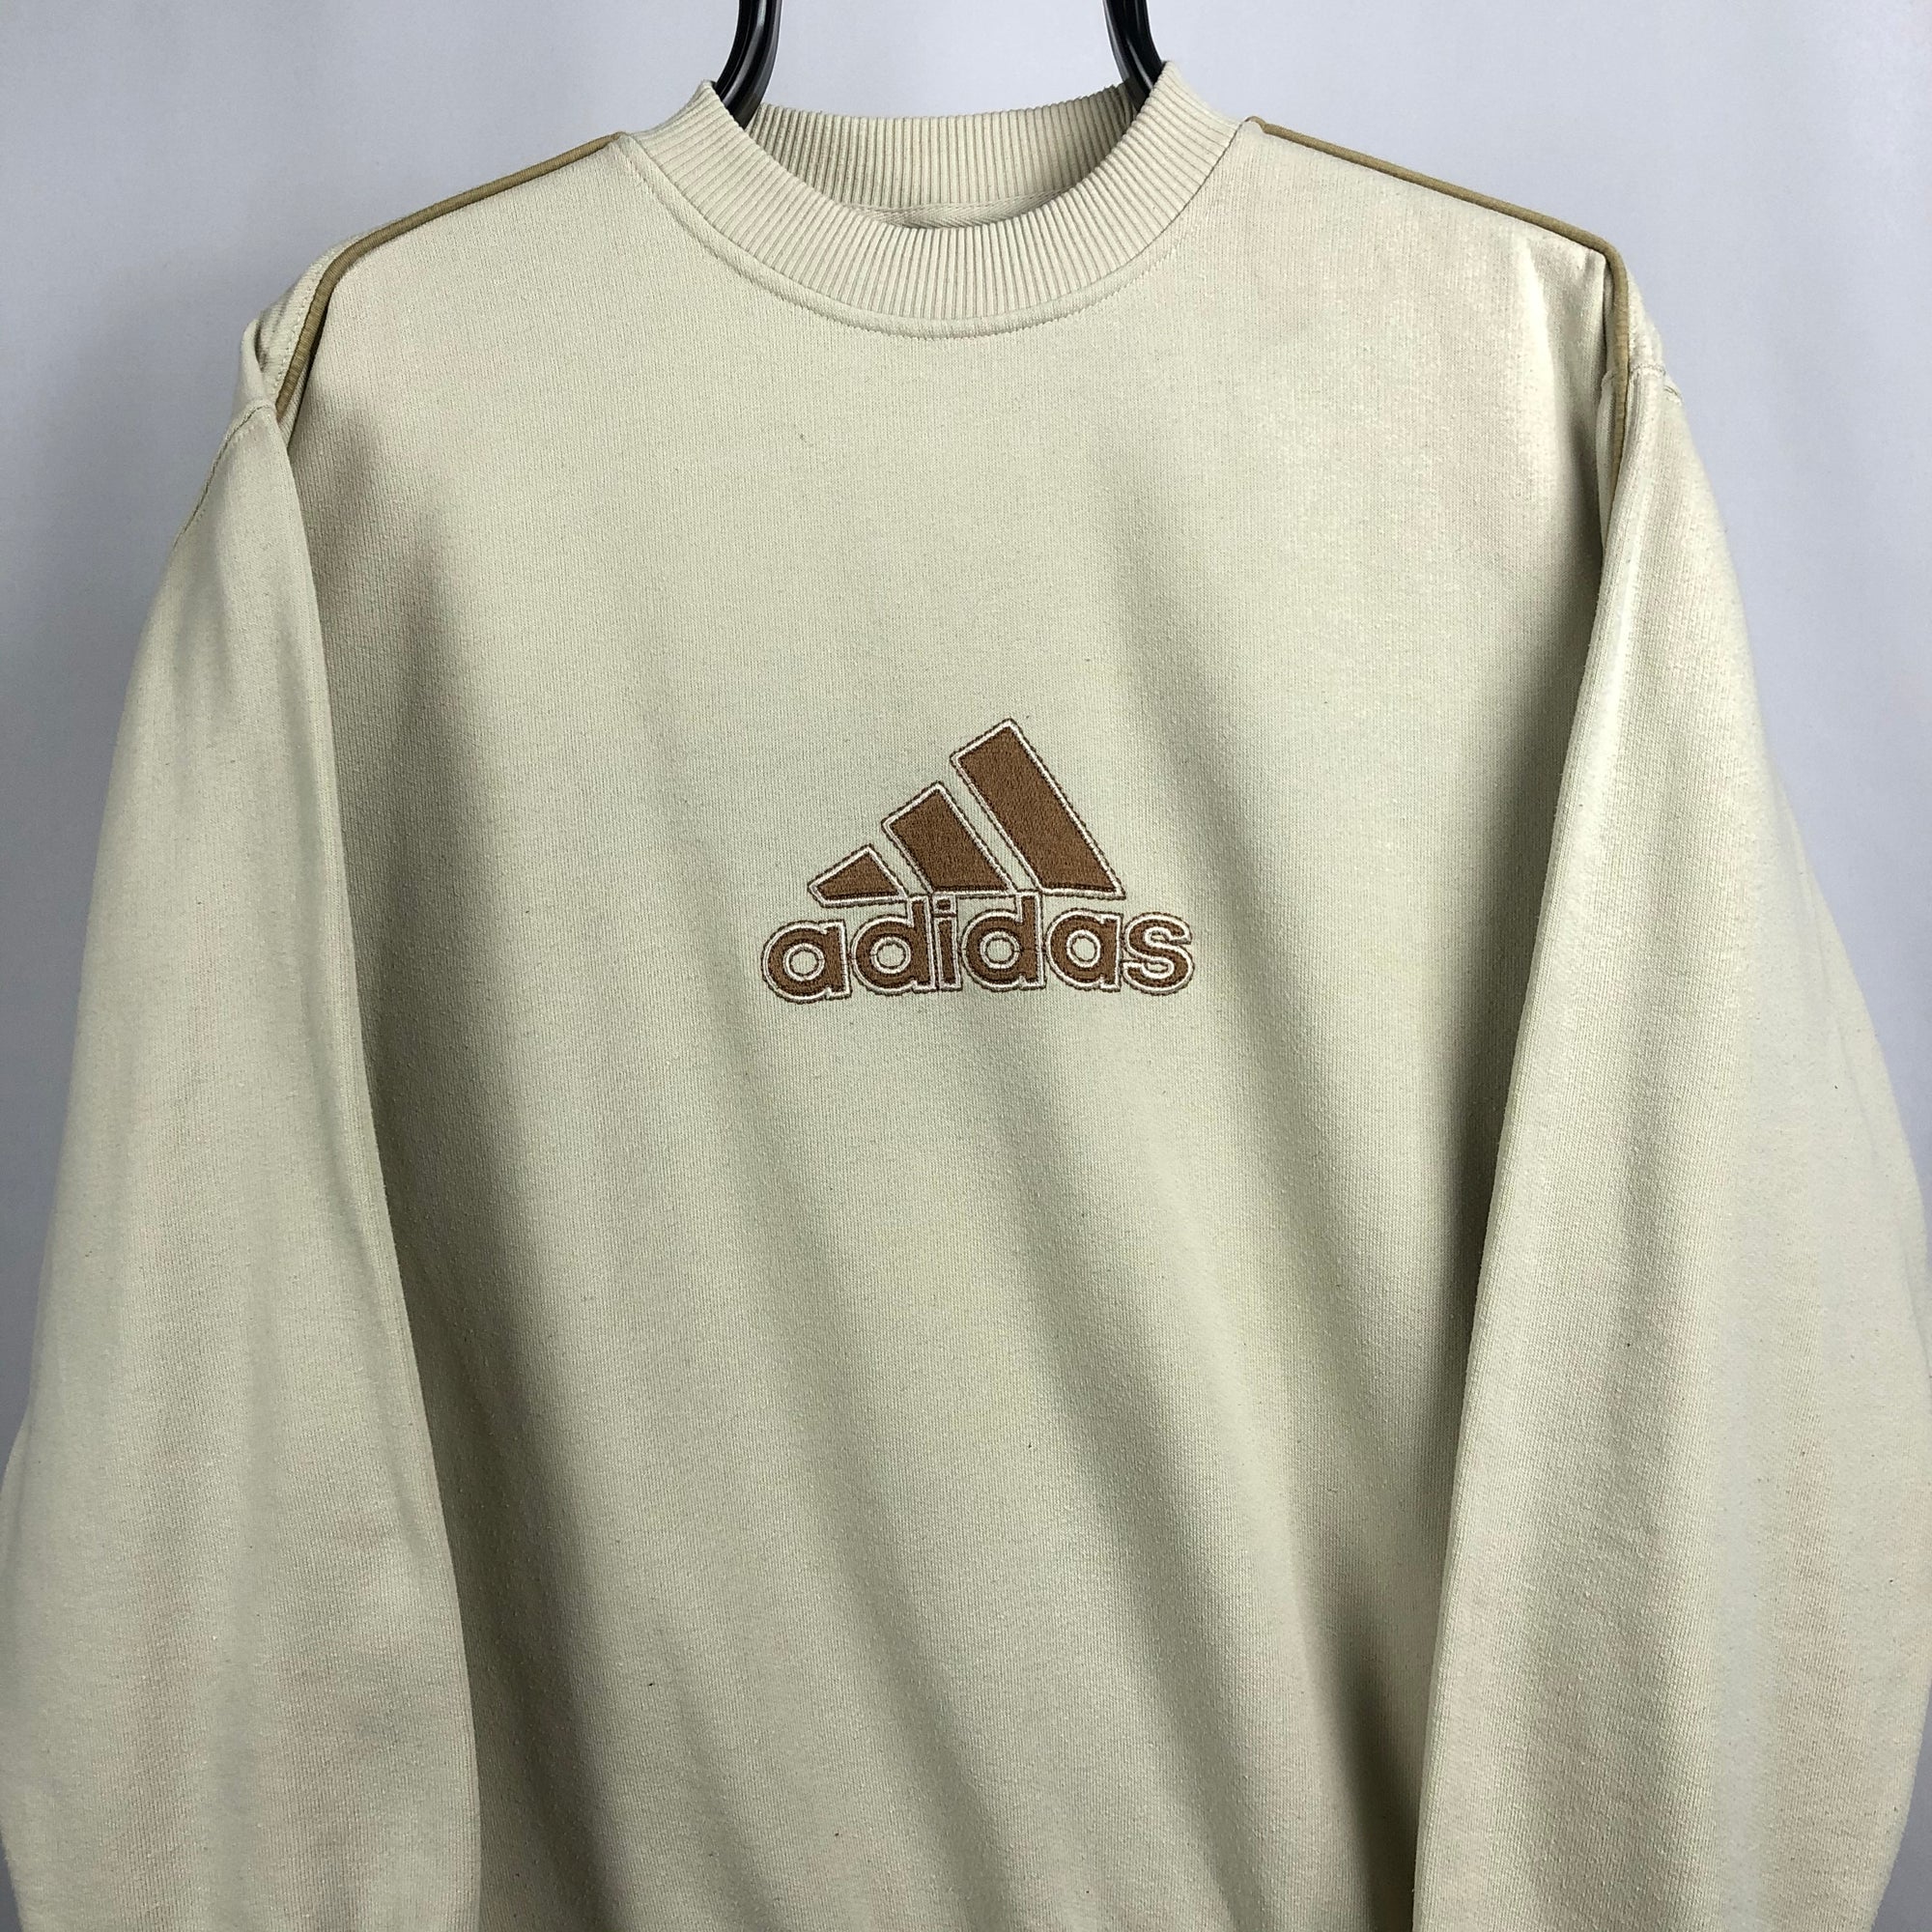 Vintage Adidas Spellout Sweatshirt in Beige - Men's Small/Women's Medium